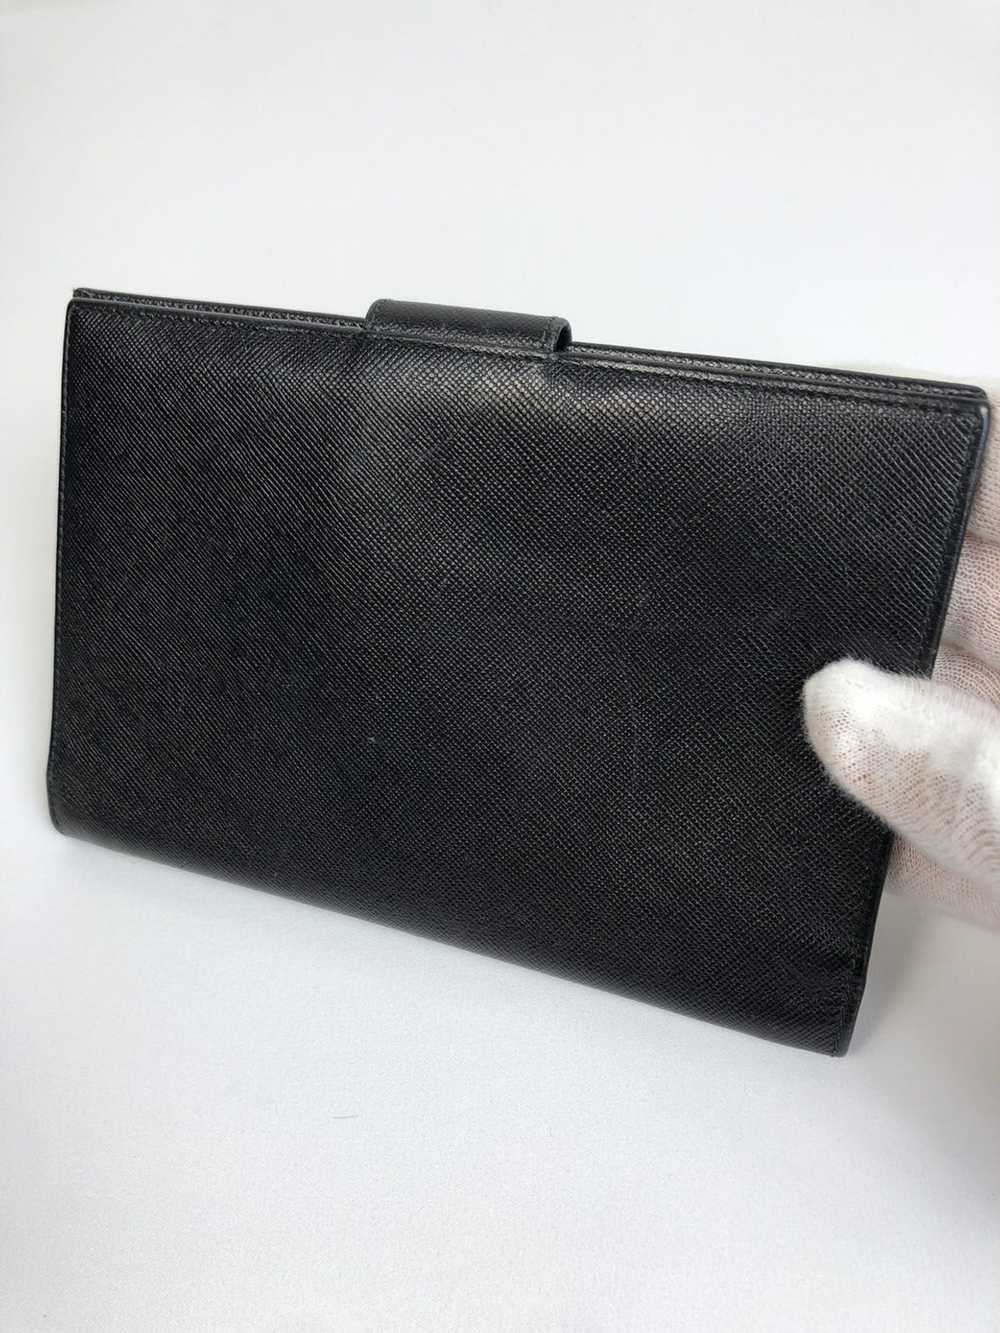 Prada Prada tessuto nero leather long wallet - image 2